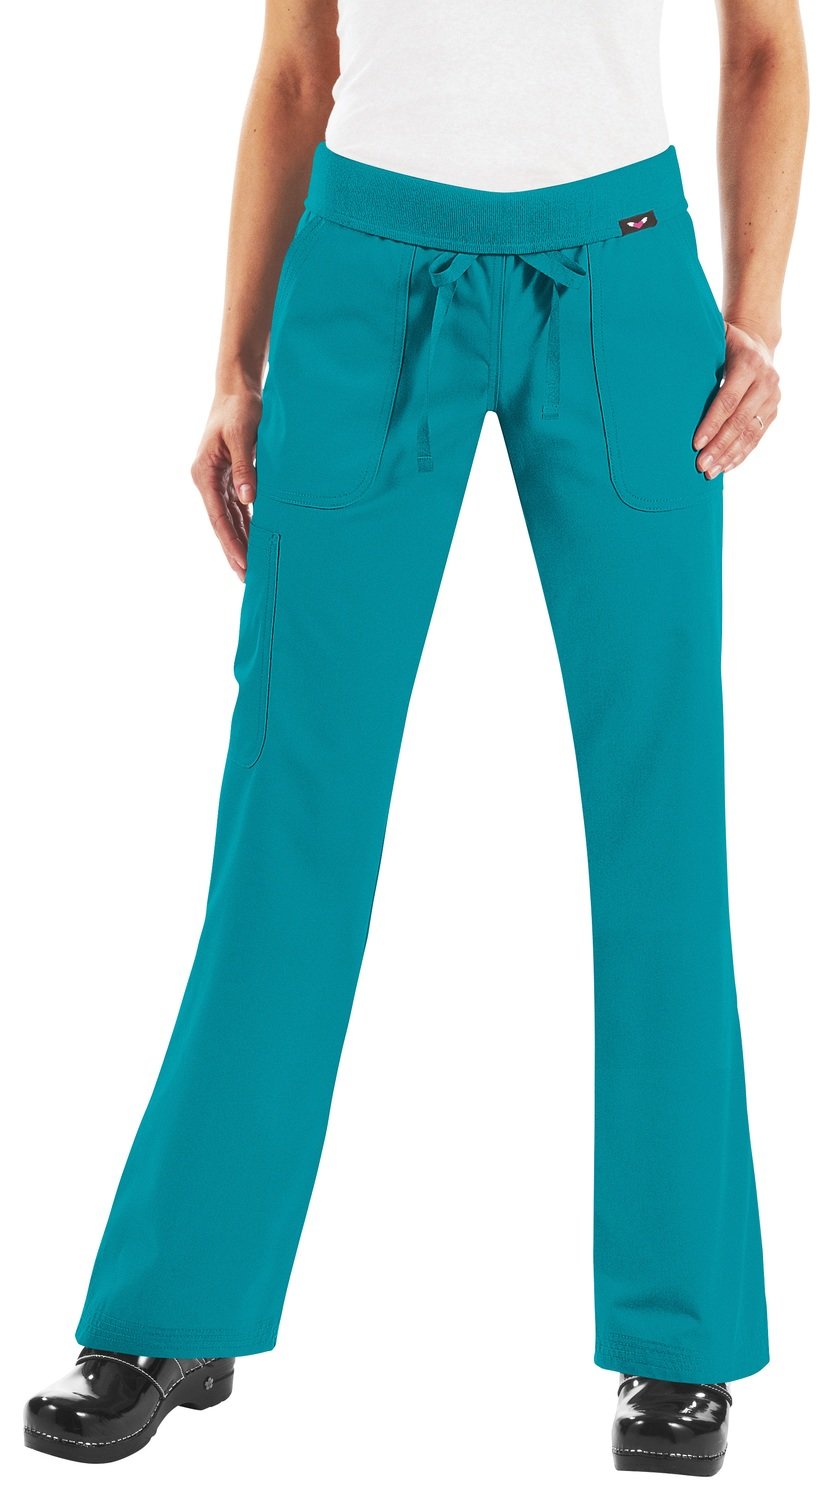 Pantalone KOI CLASSICS Morgan Donna Colore 59. Turquoise